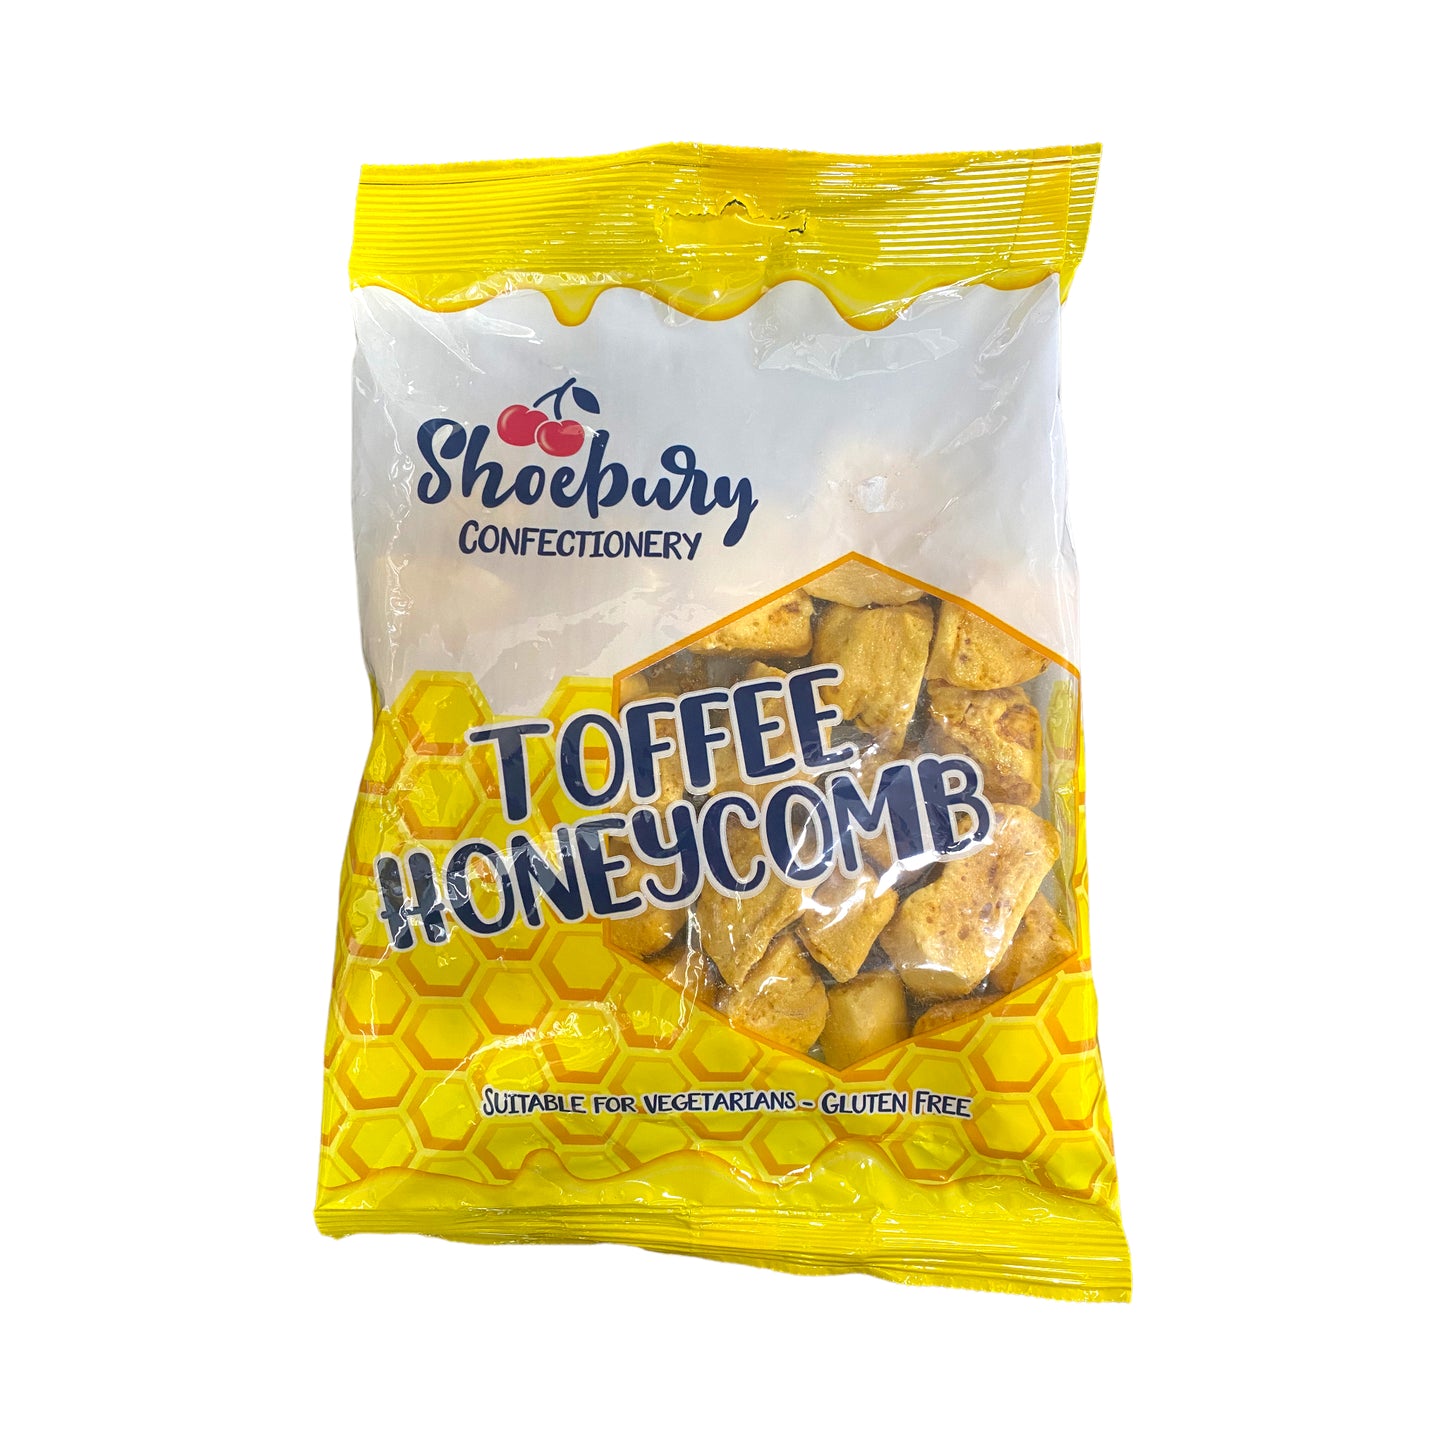 Shoebury Toffee Honeycomb - 150g